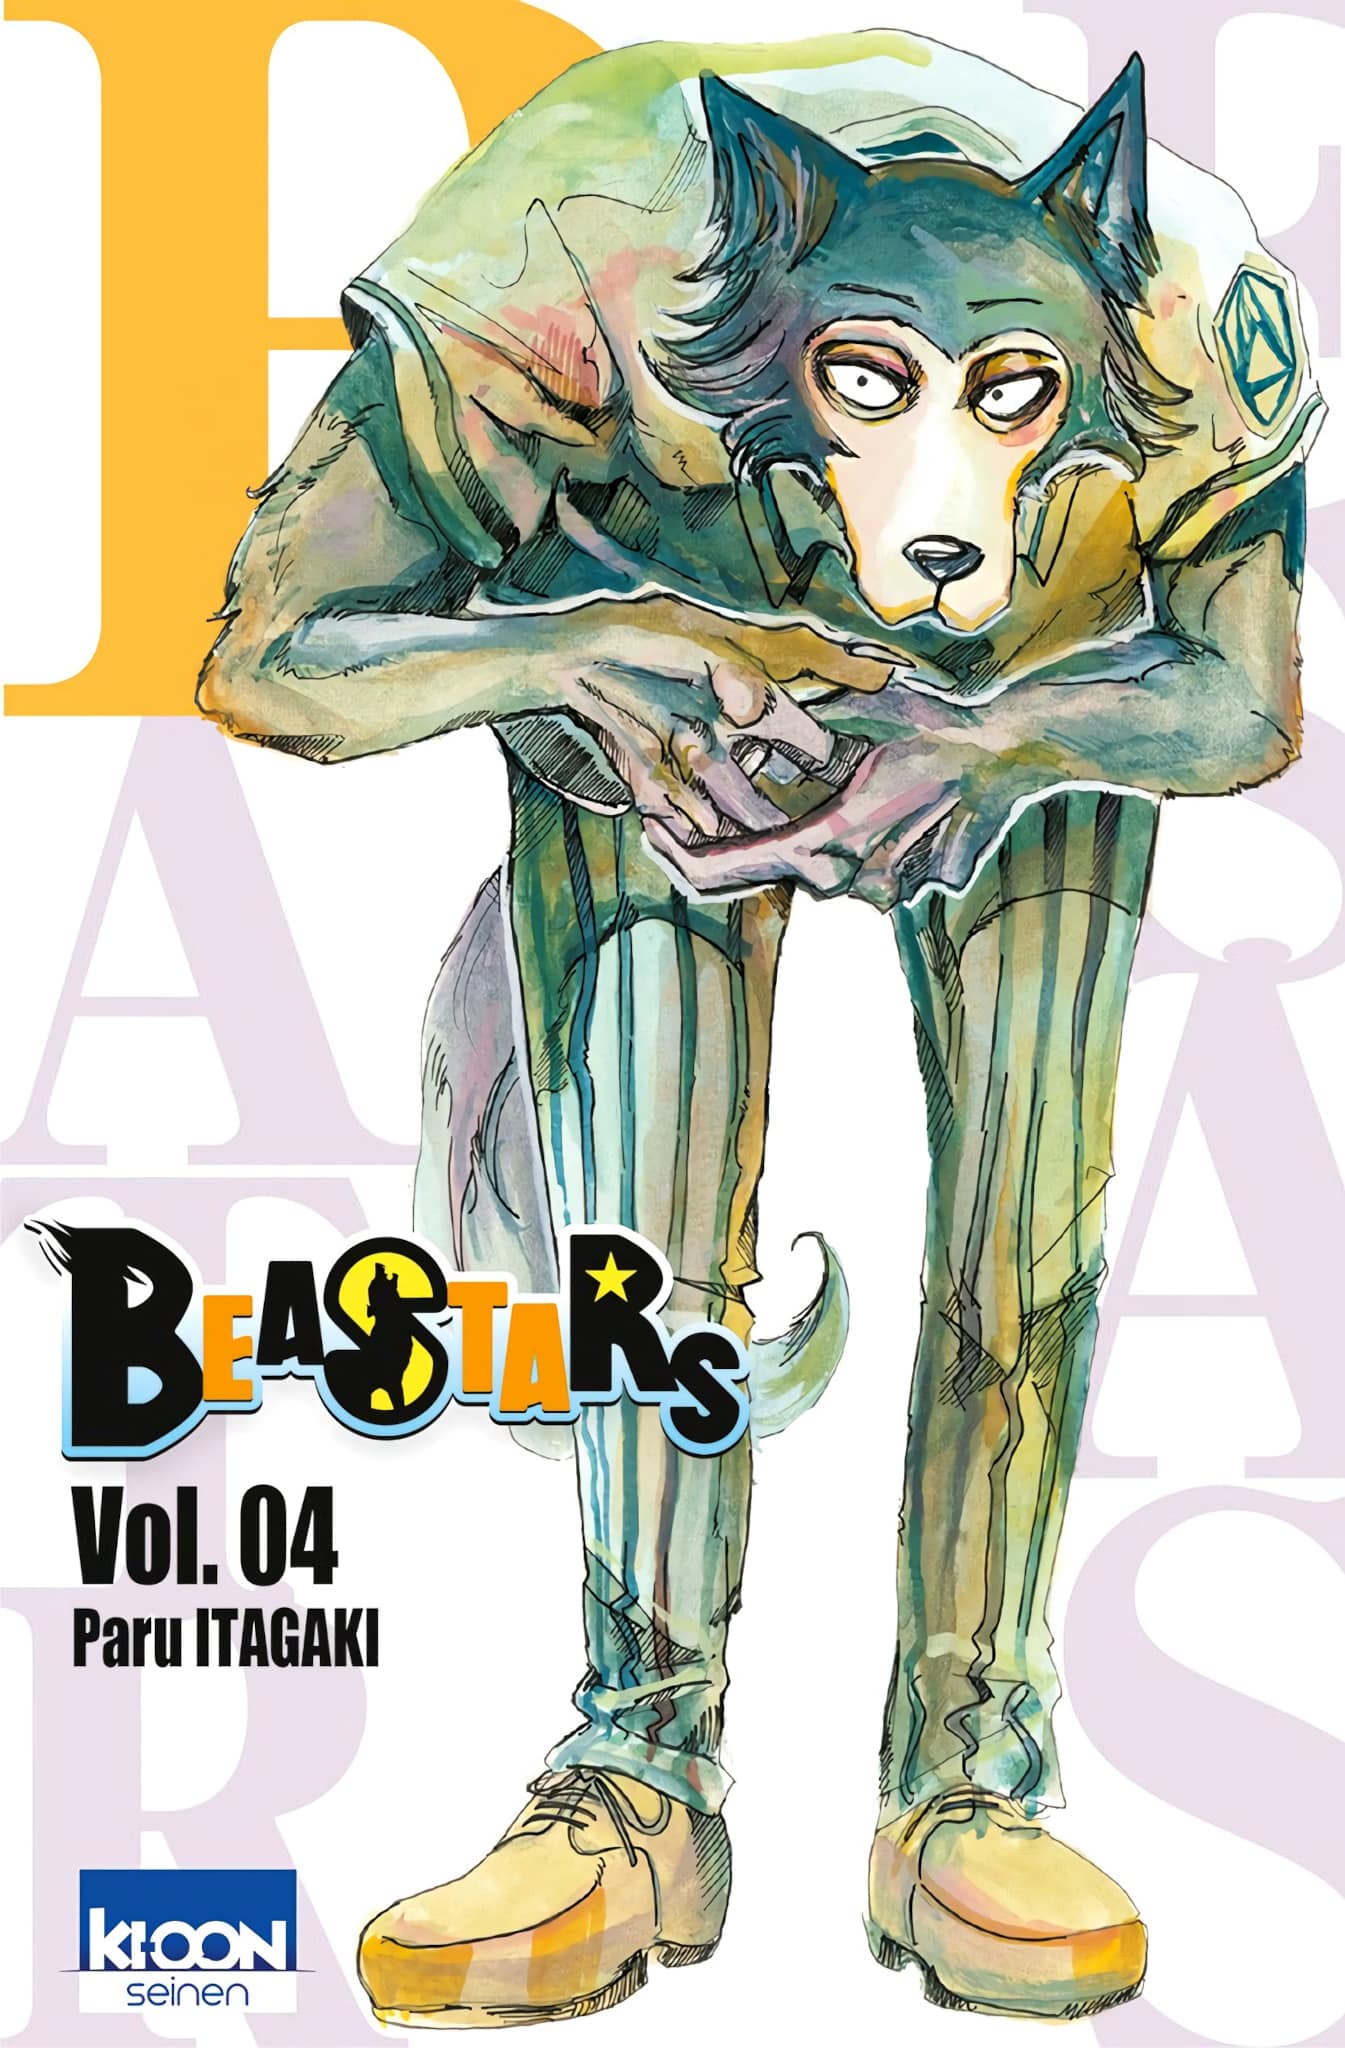 Tome 4 du manga Beastars